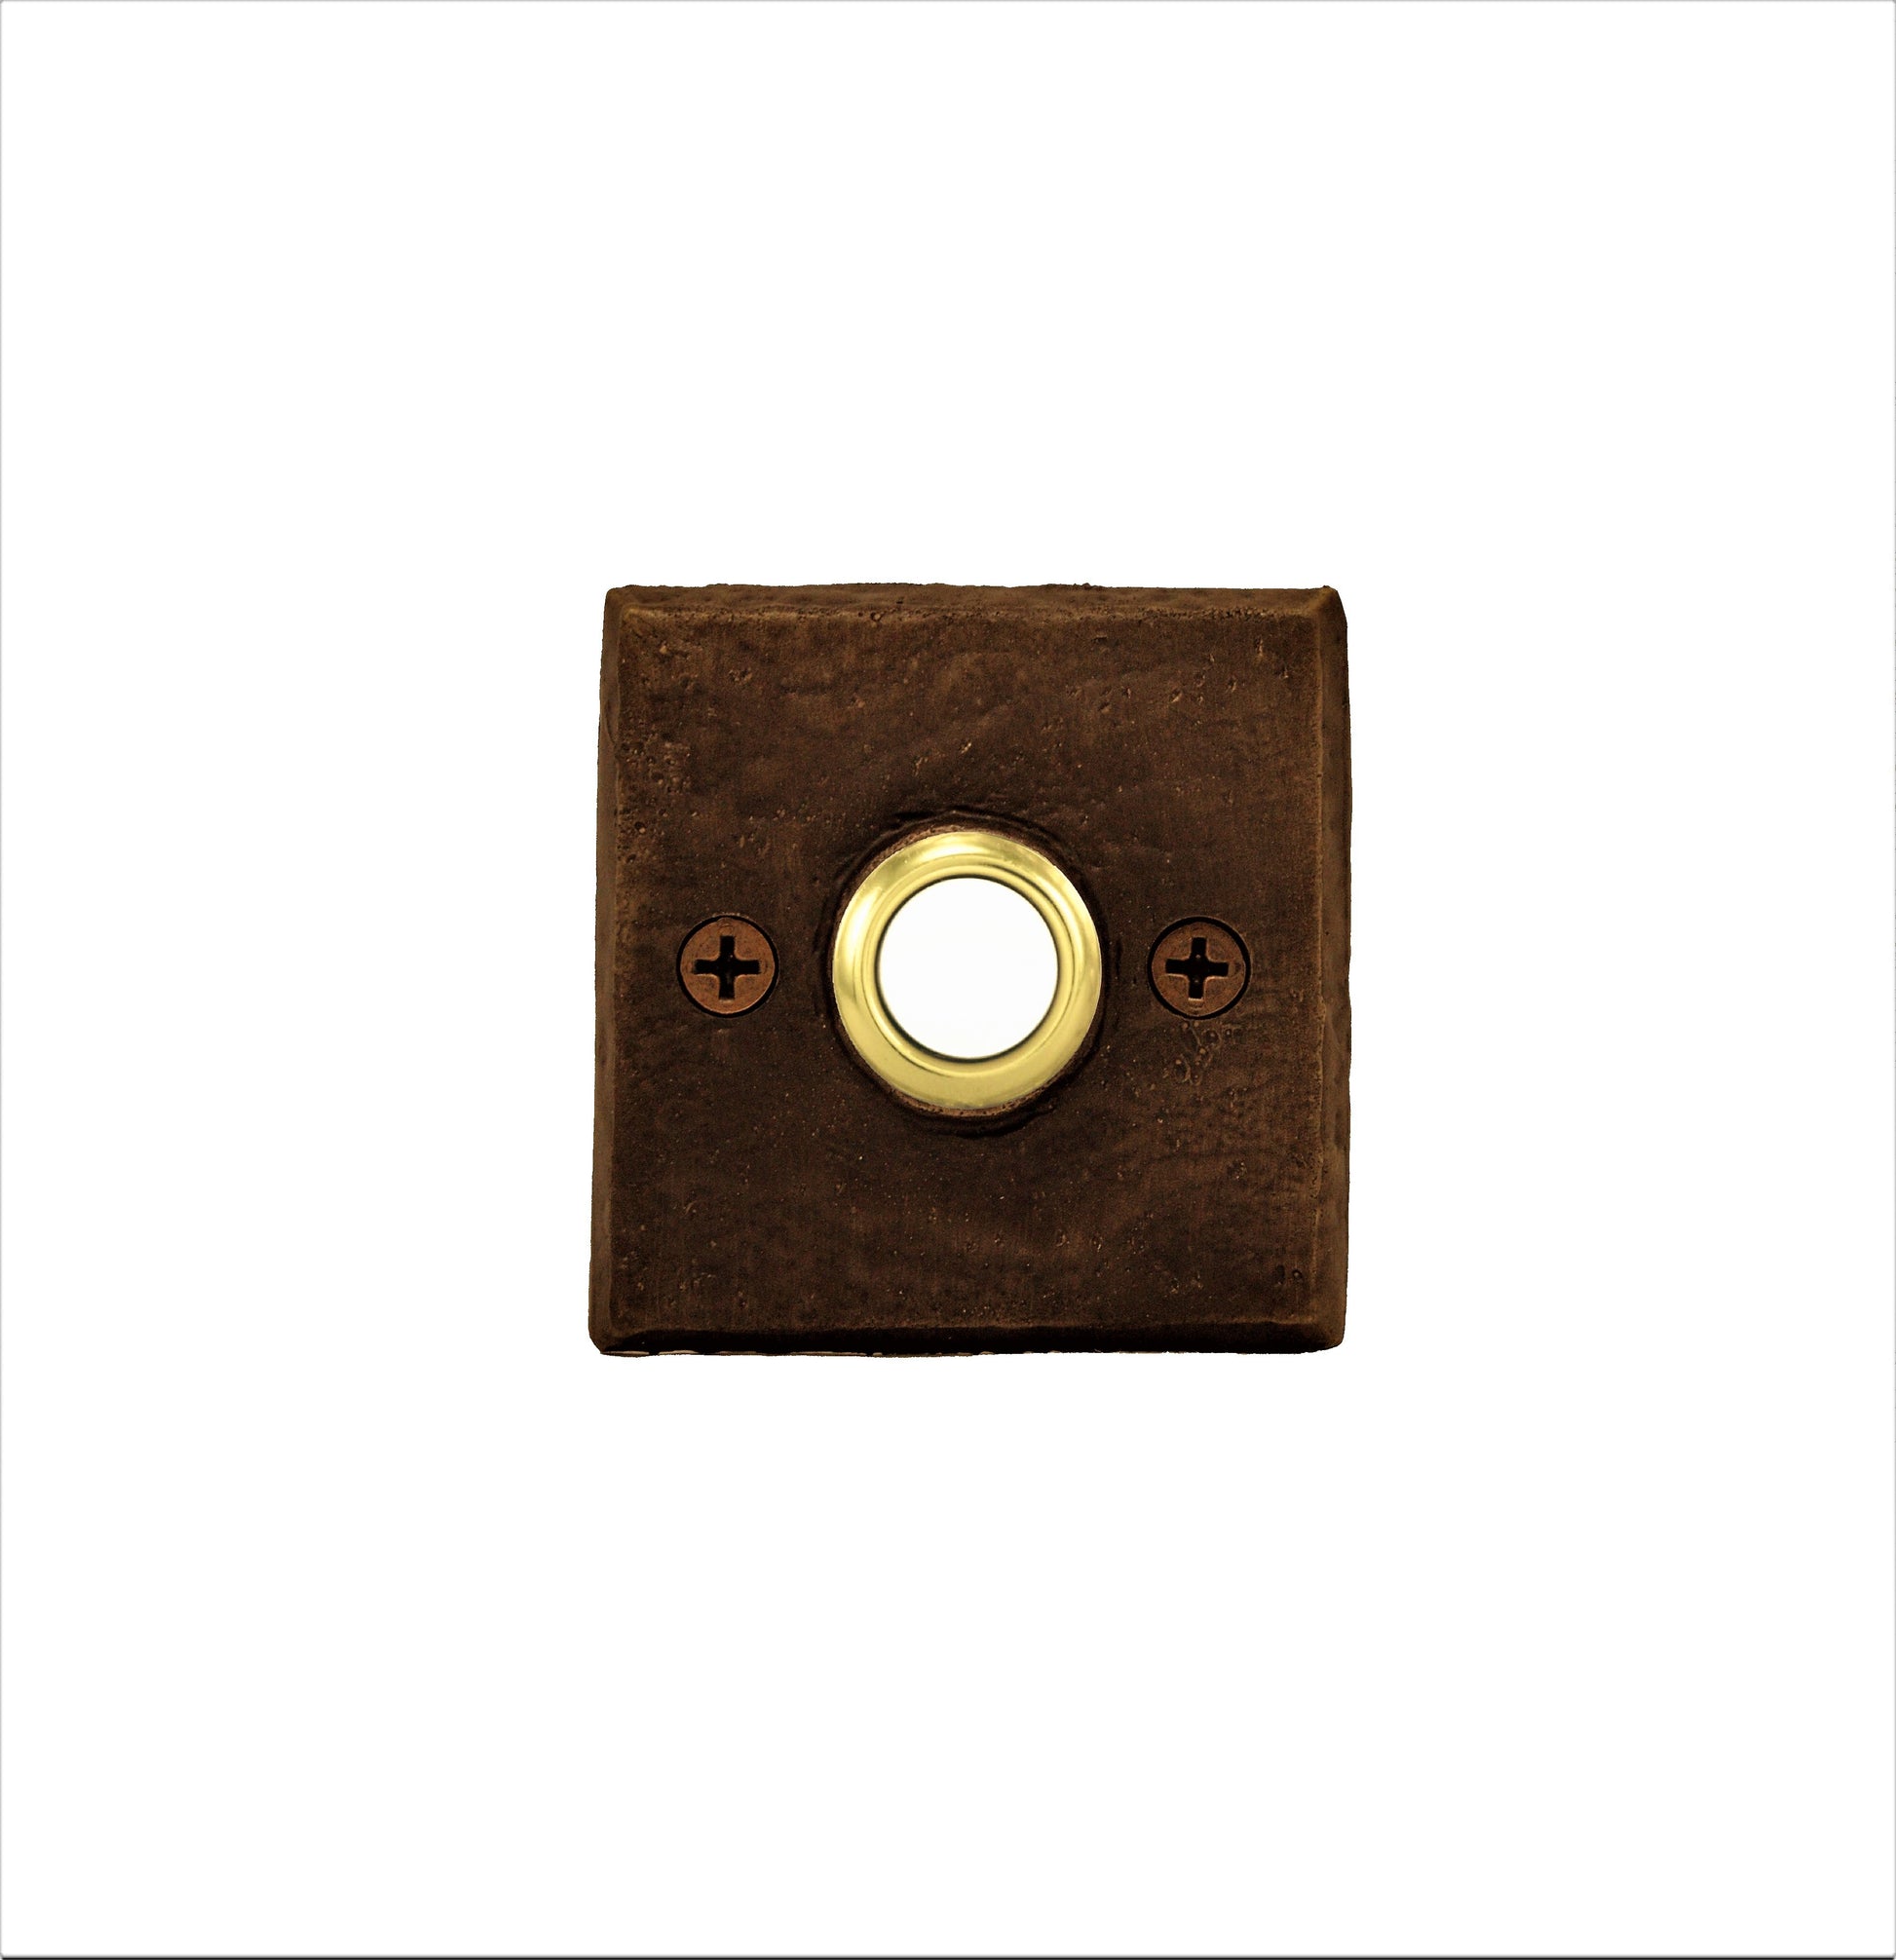 Square bronze doorbell with patina